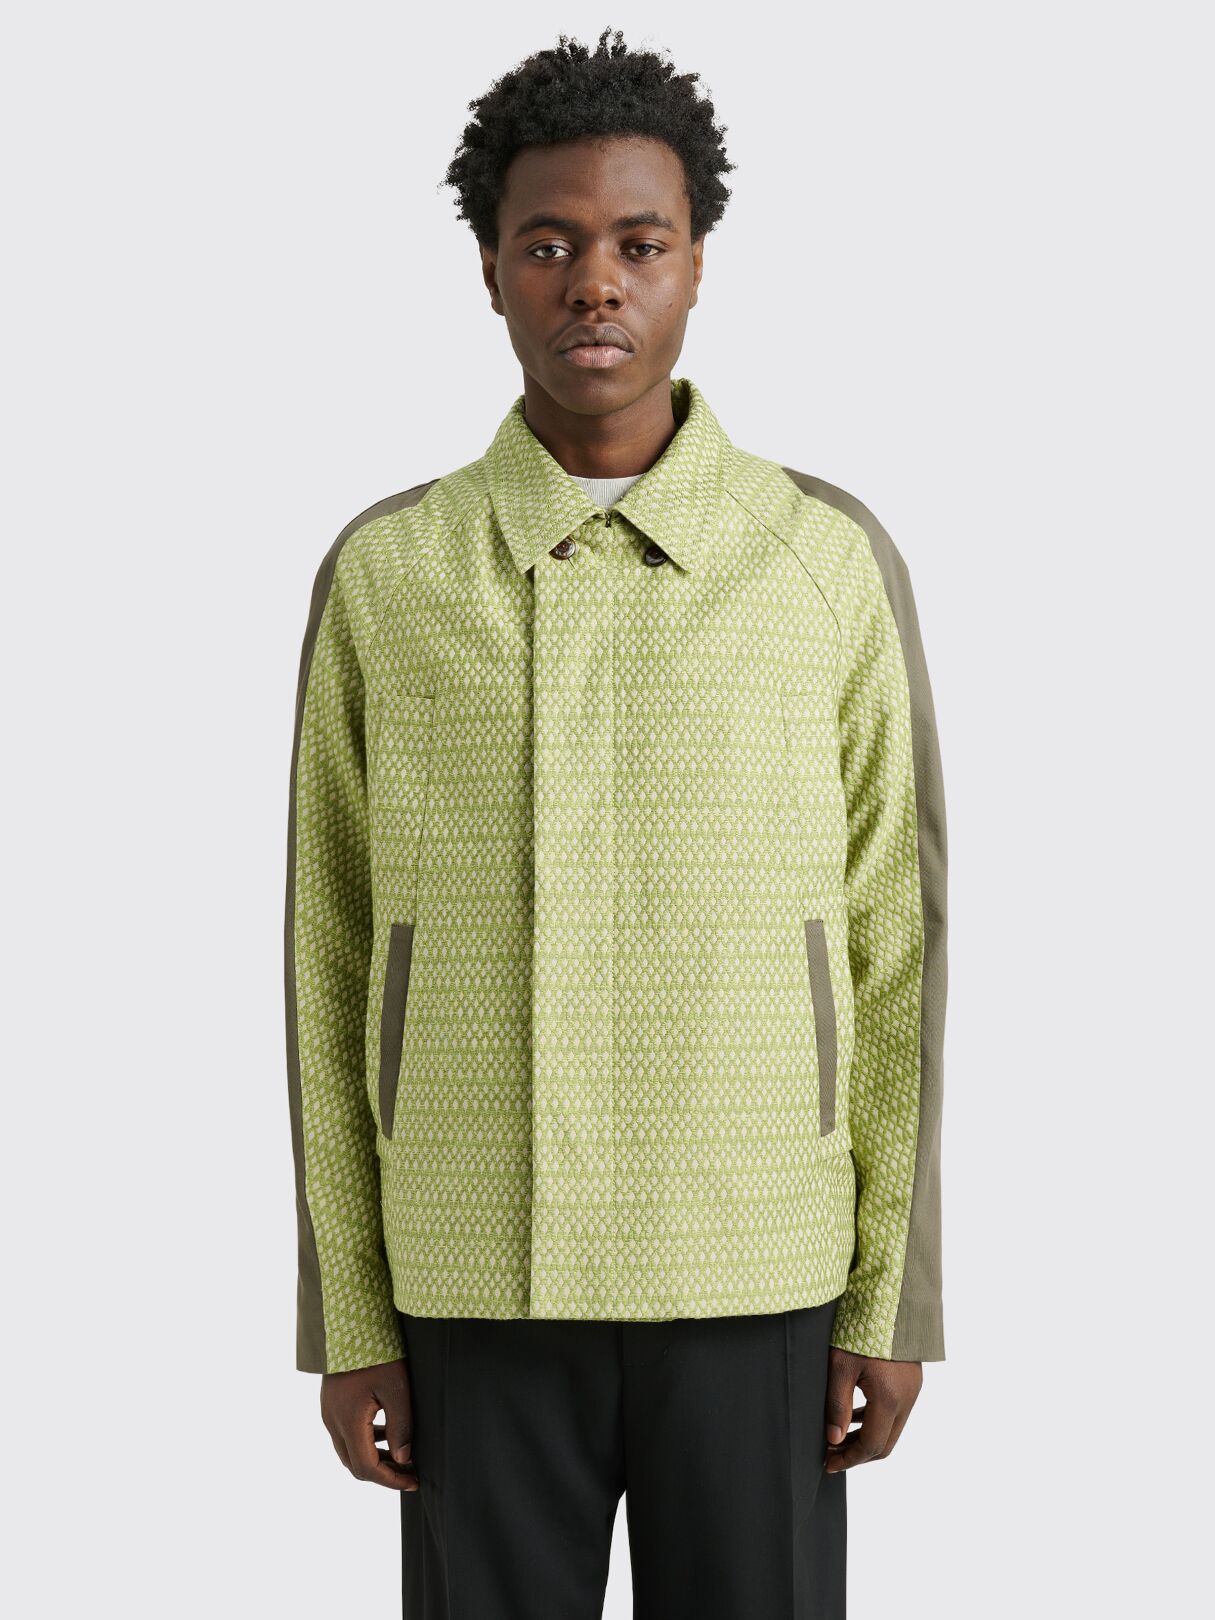 Très Bien - Kiko Kostadinov Tonkin Contrast Jacket Green Sand / Khaki